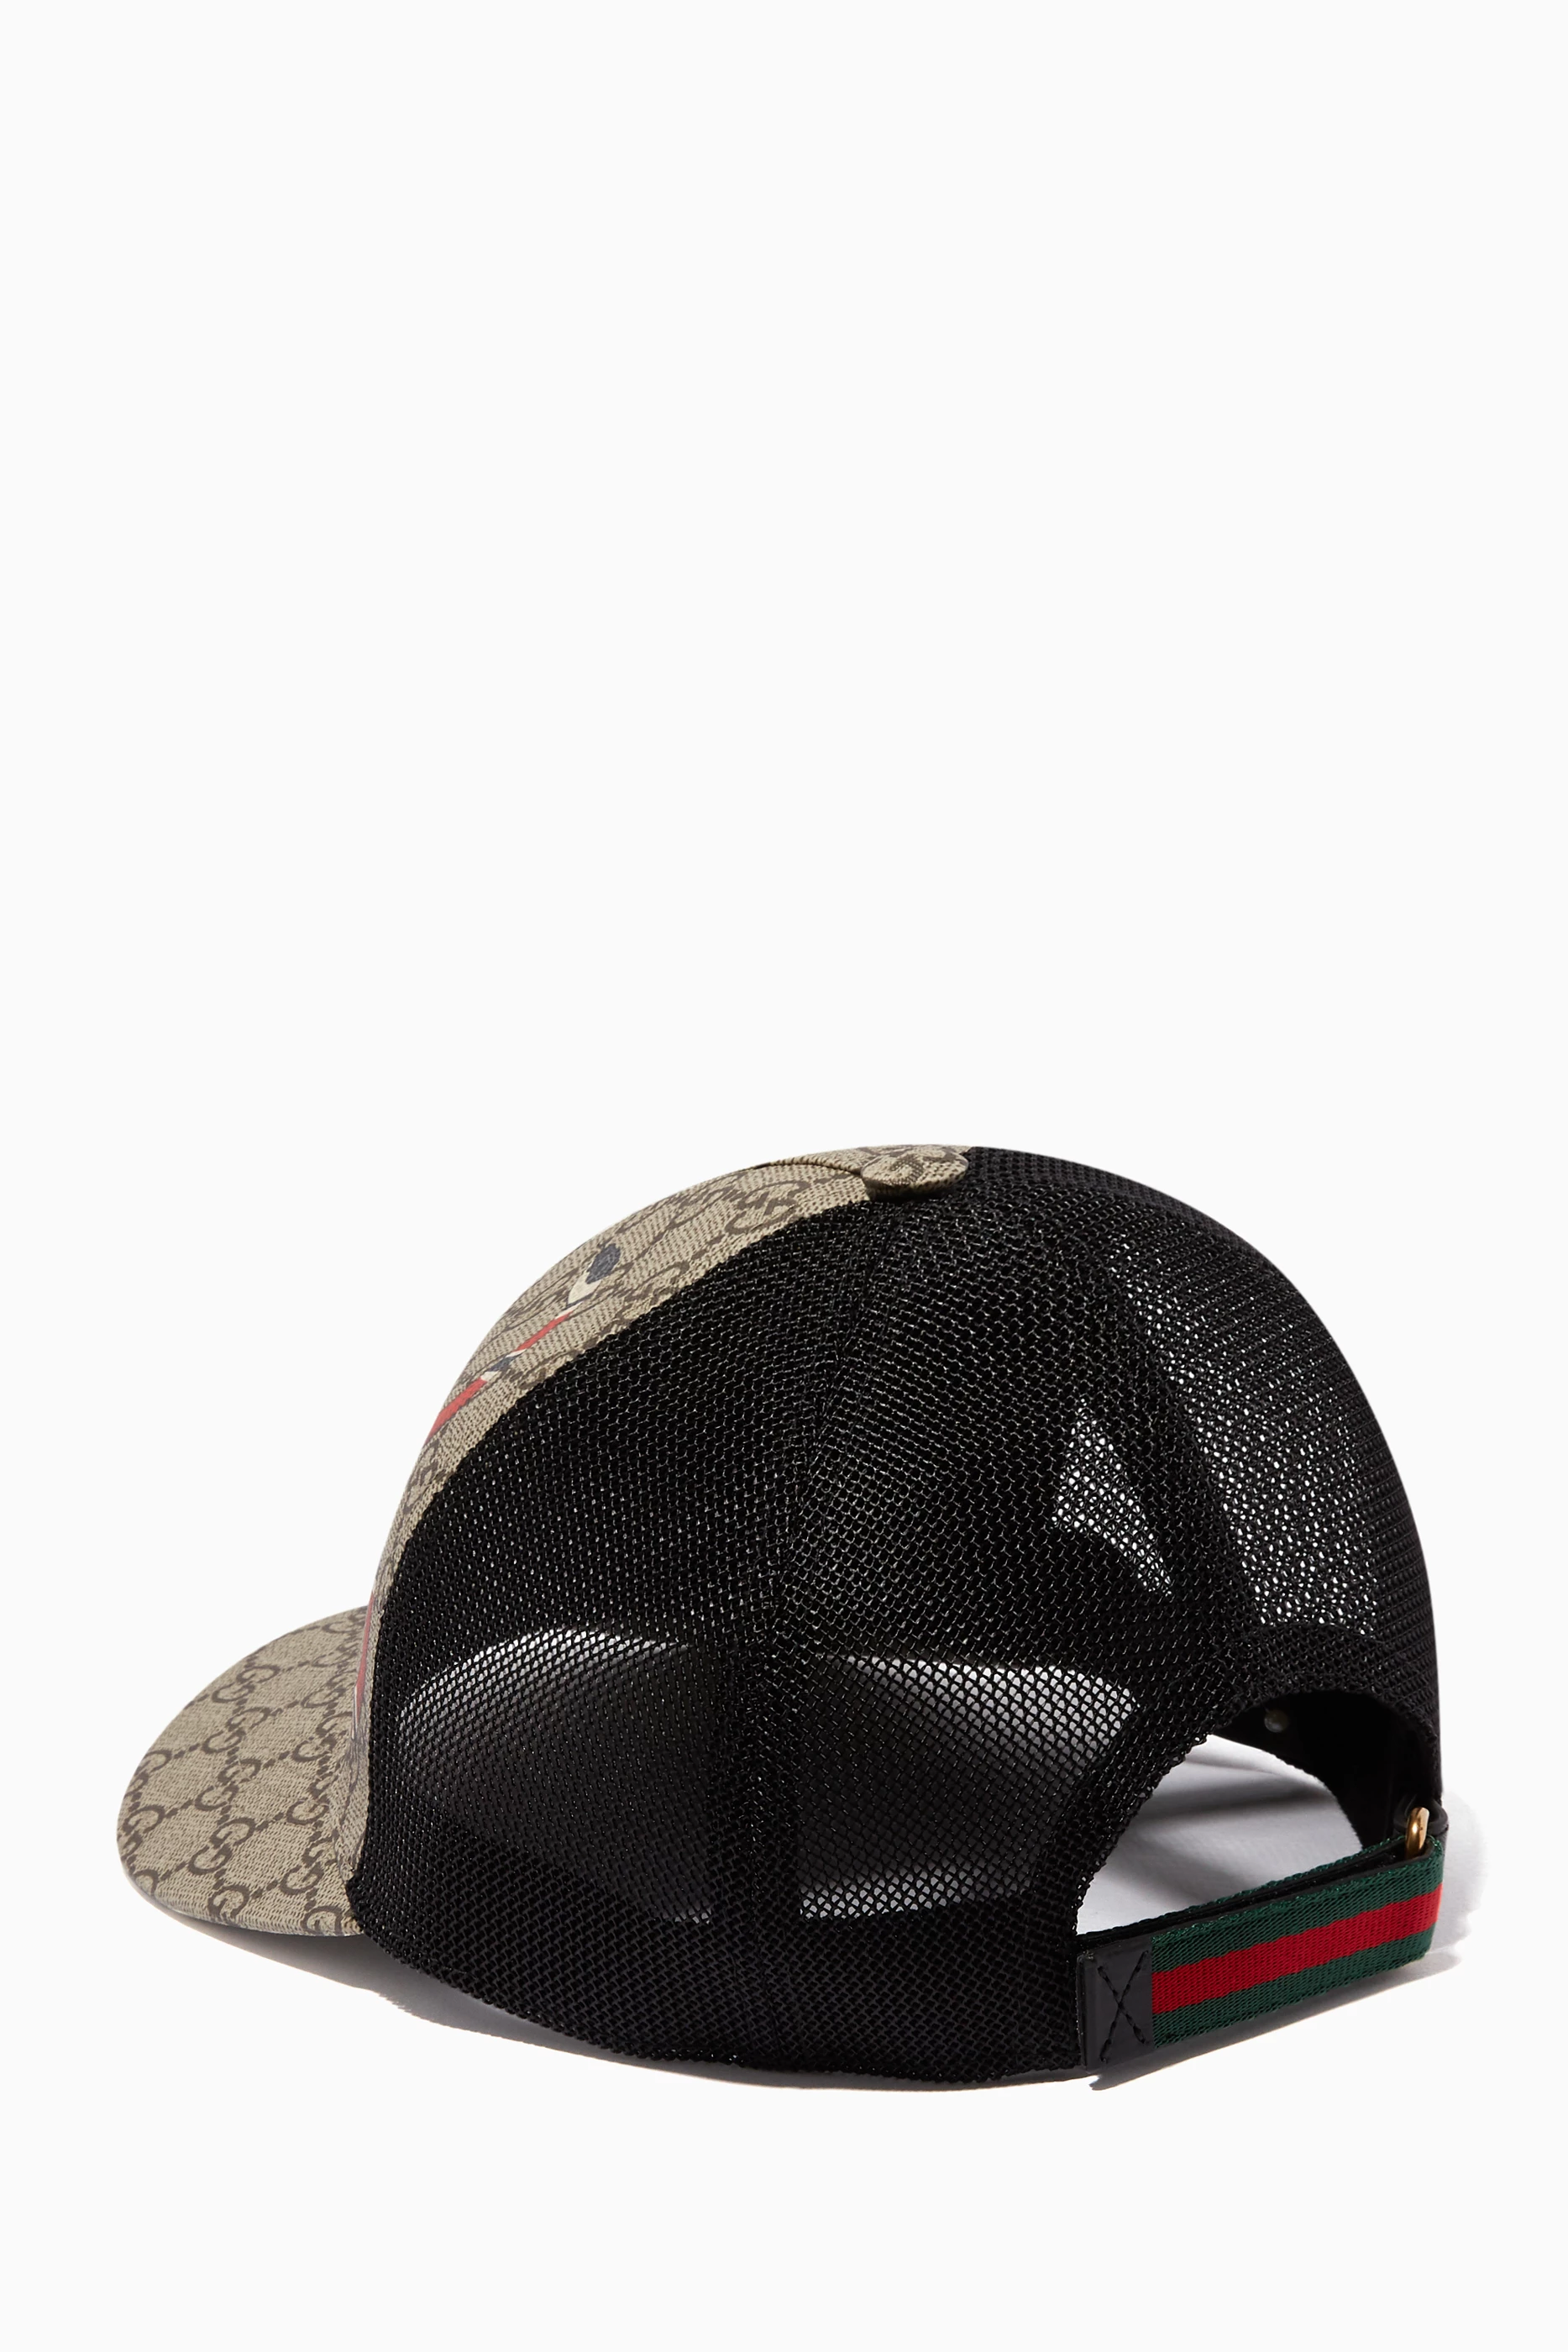 Gucci Tigers Print GG Supreme Baseball Hat Beige/Brown